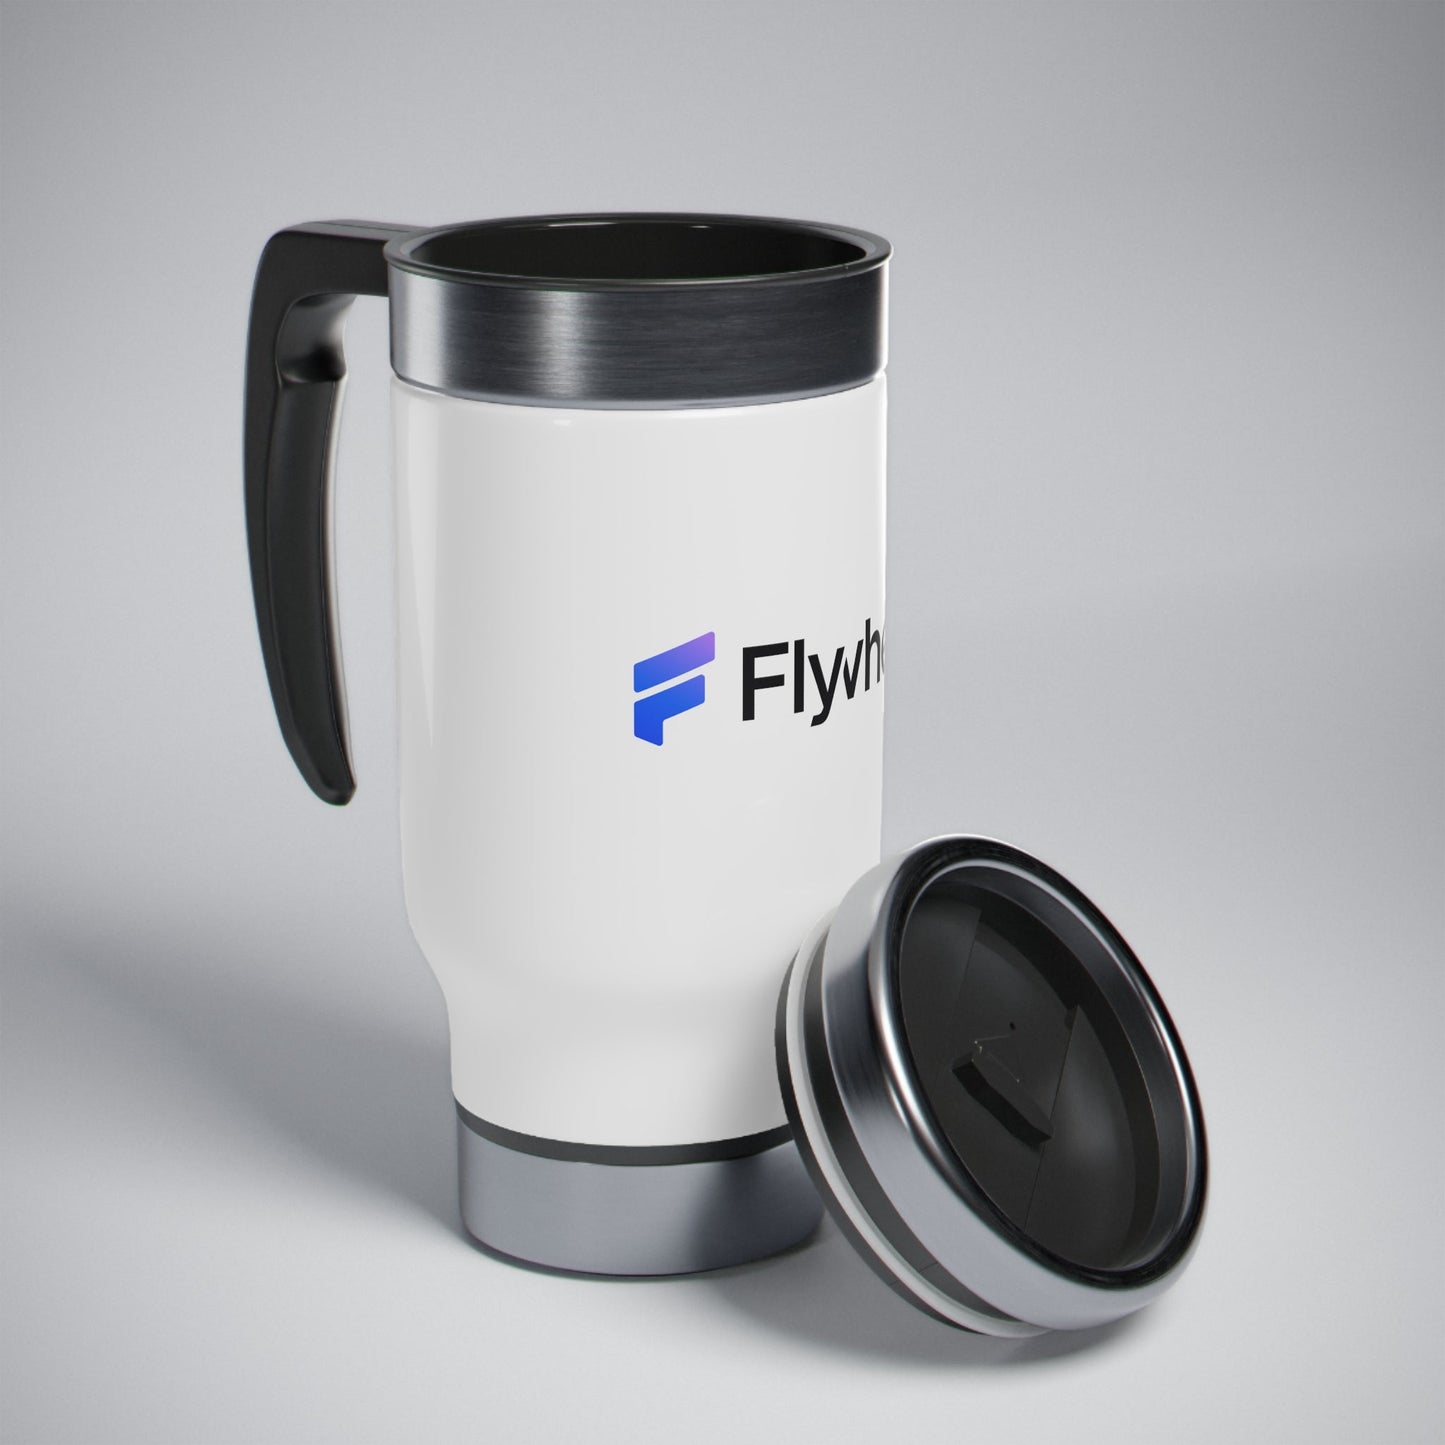 Flywheel Stainless Steel Travel Mug with Handle, 14oz - DSP On Demand